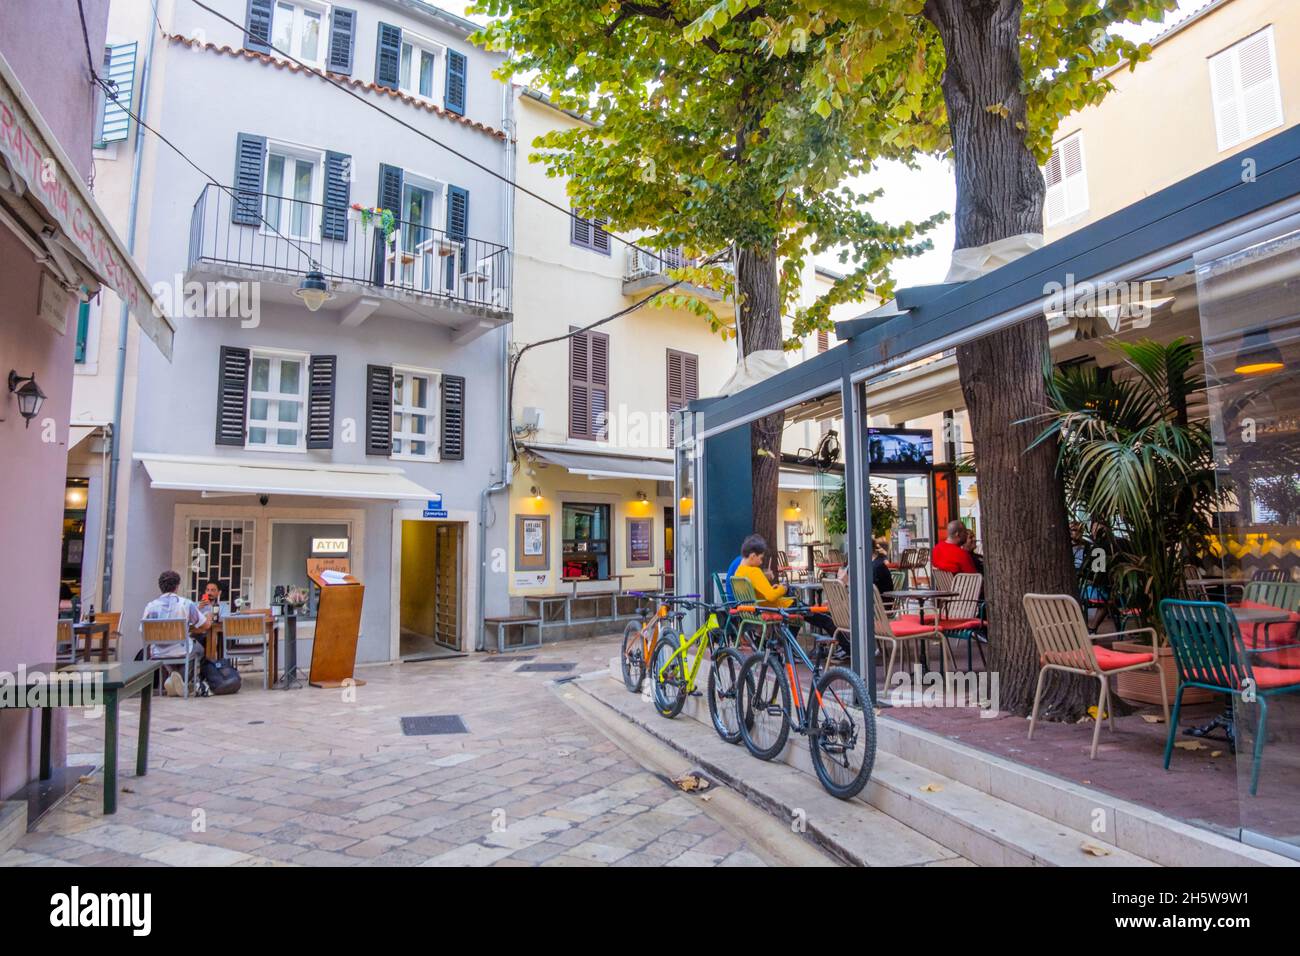 Cafe bar Cult, old town, Zadar, Croatia Stock Photo